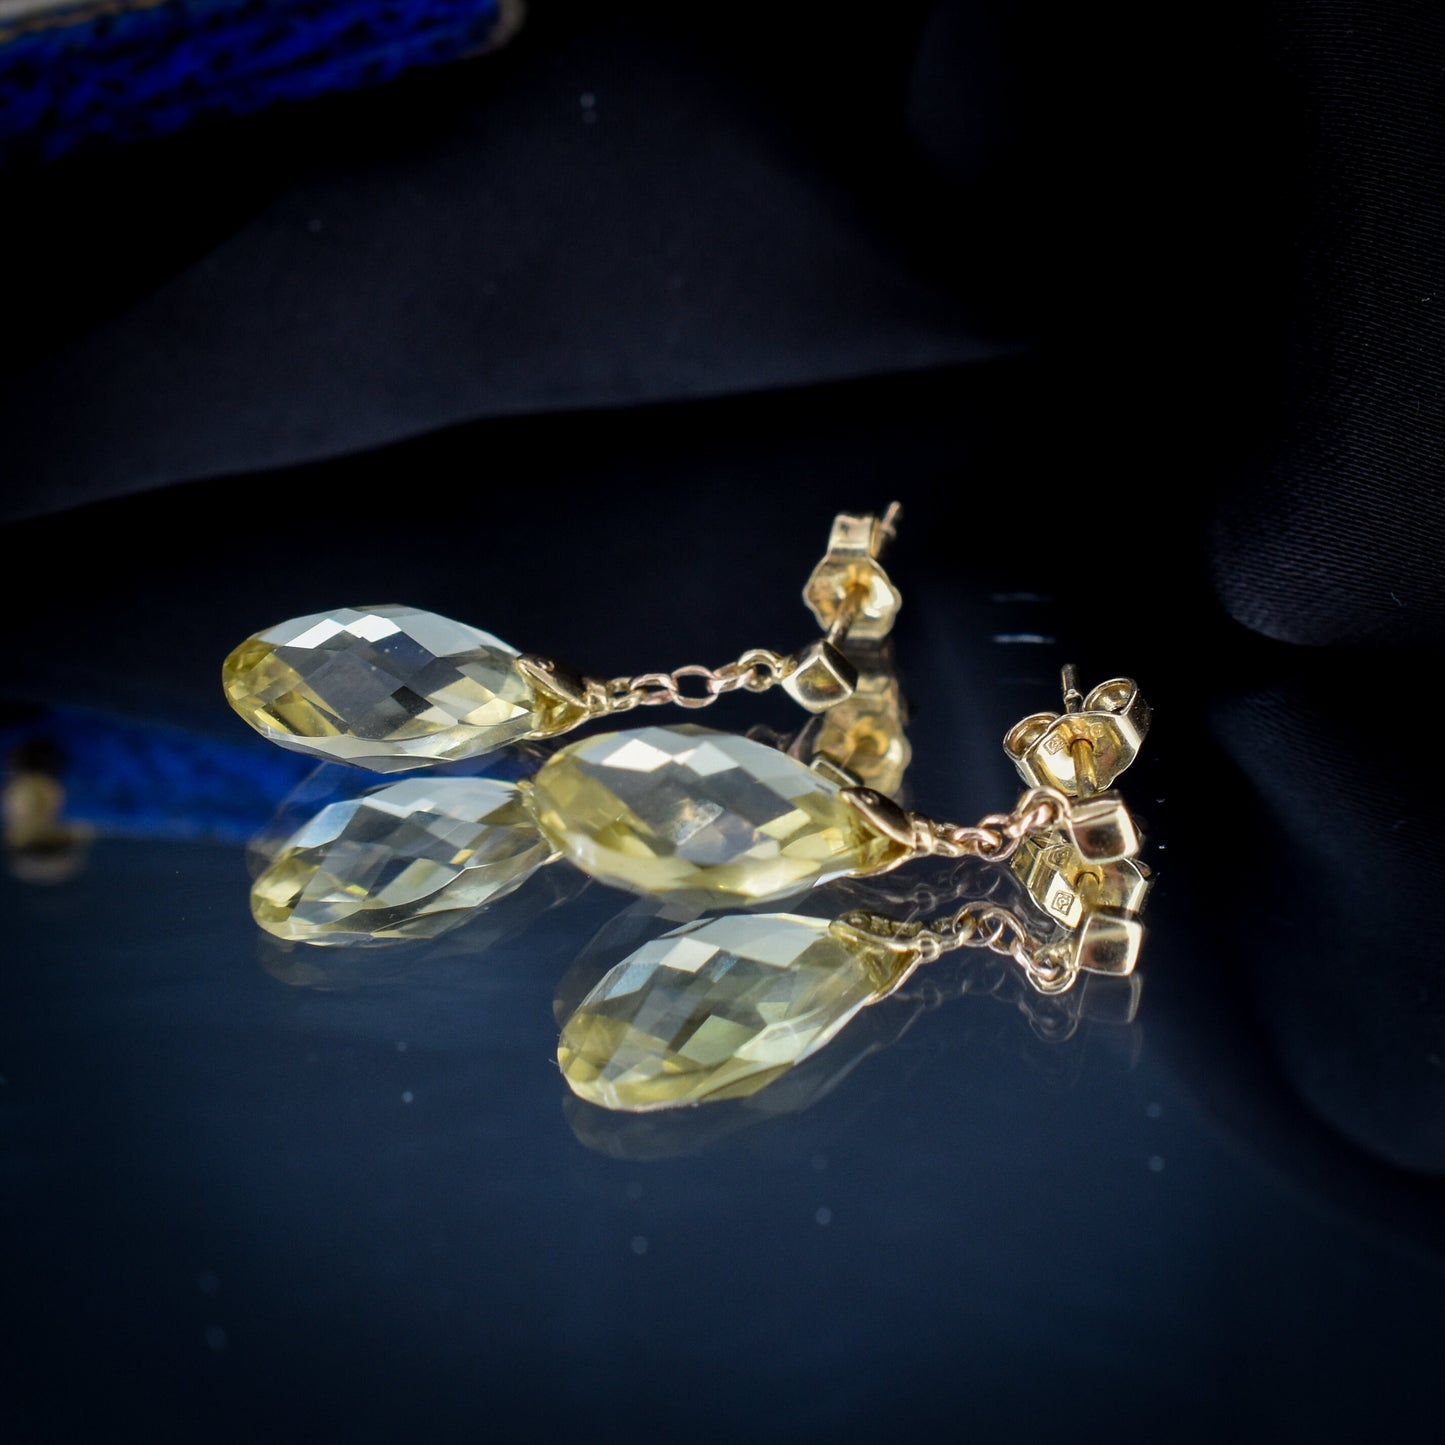 Vintage Faceted Briolette Cut Citrine Drop 9ct Gold Earrings